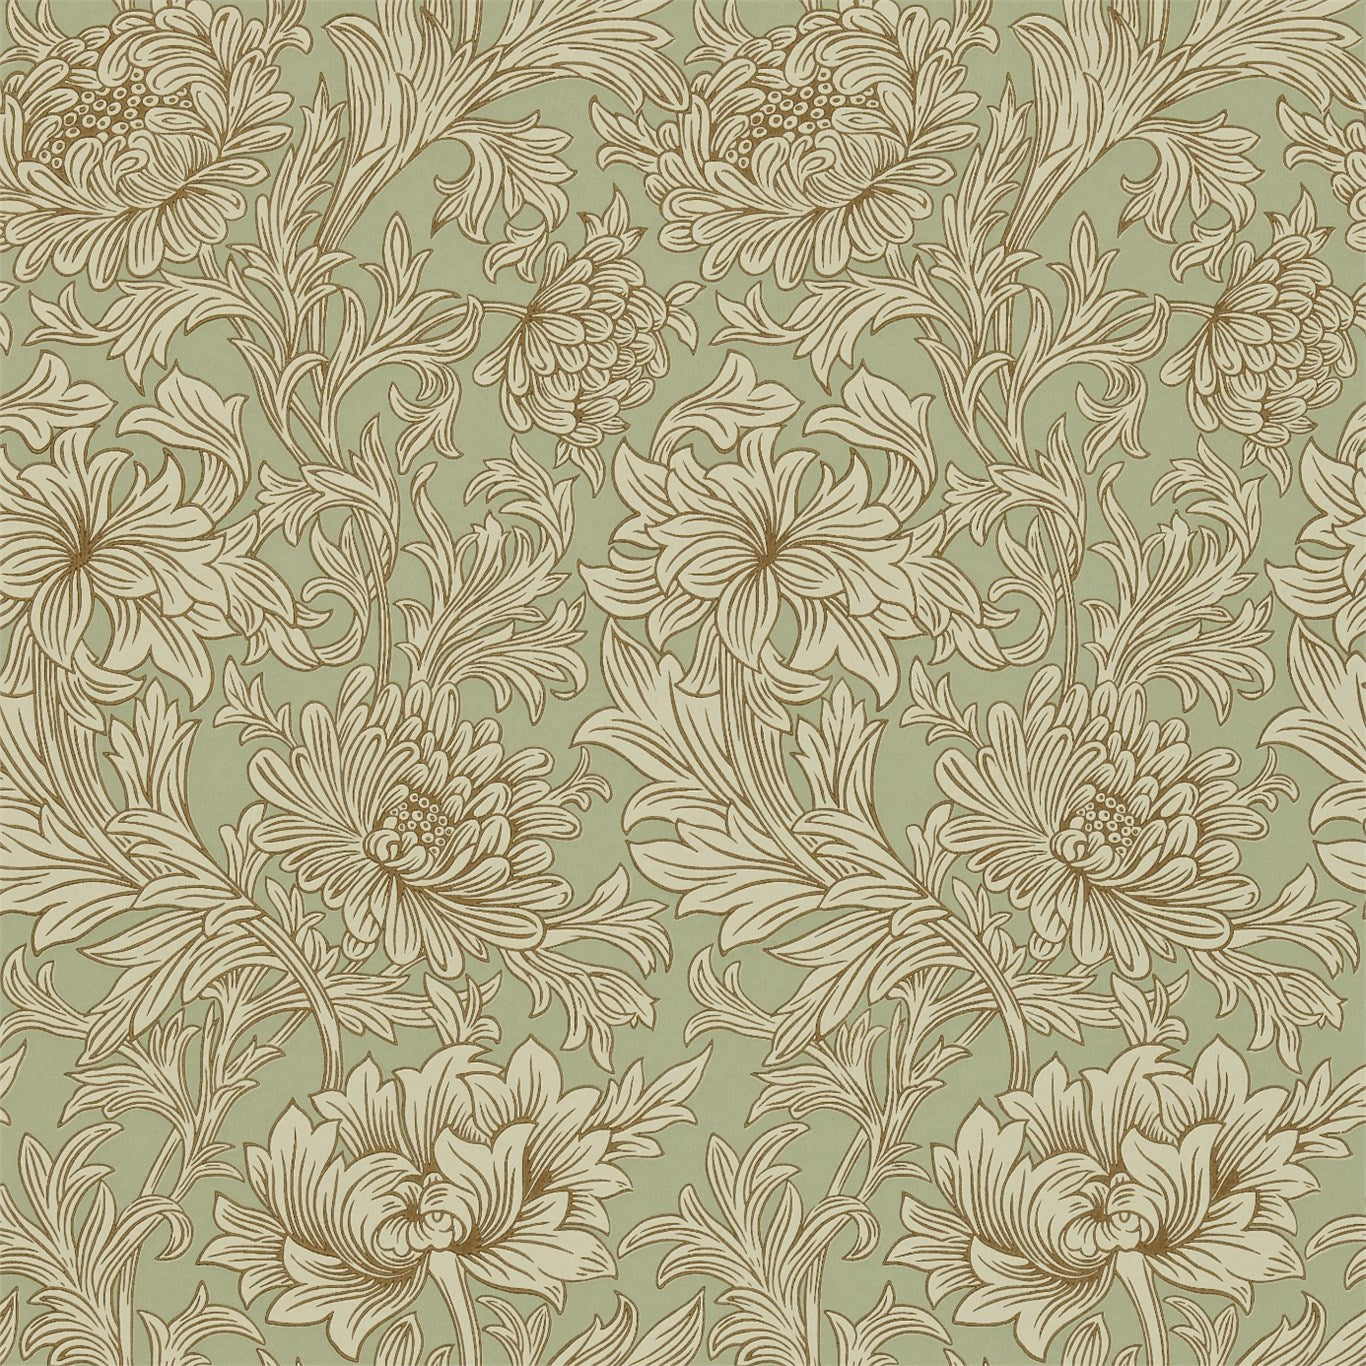 Chrysanthemum Toile Eggshell/Gold Wallpaper DMCW210418 by Morris & Co